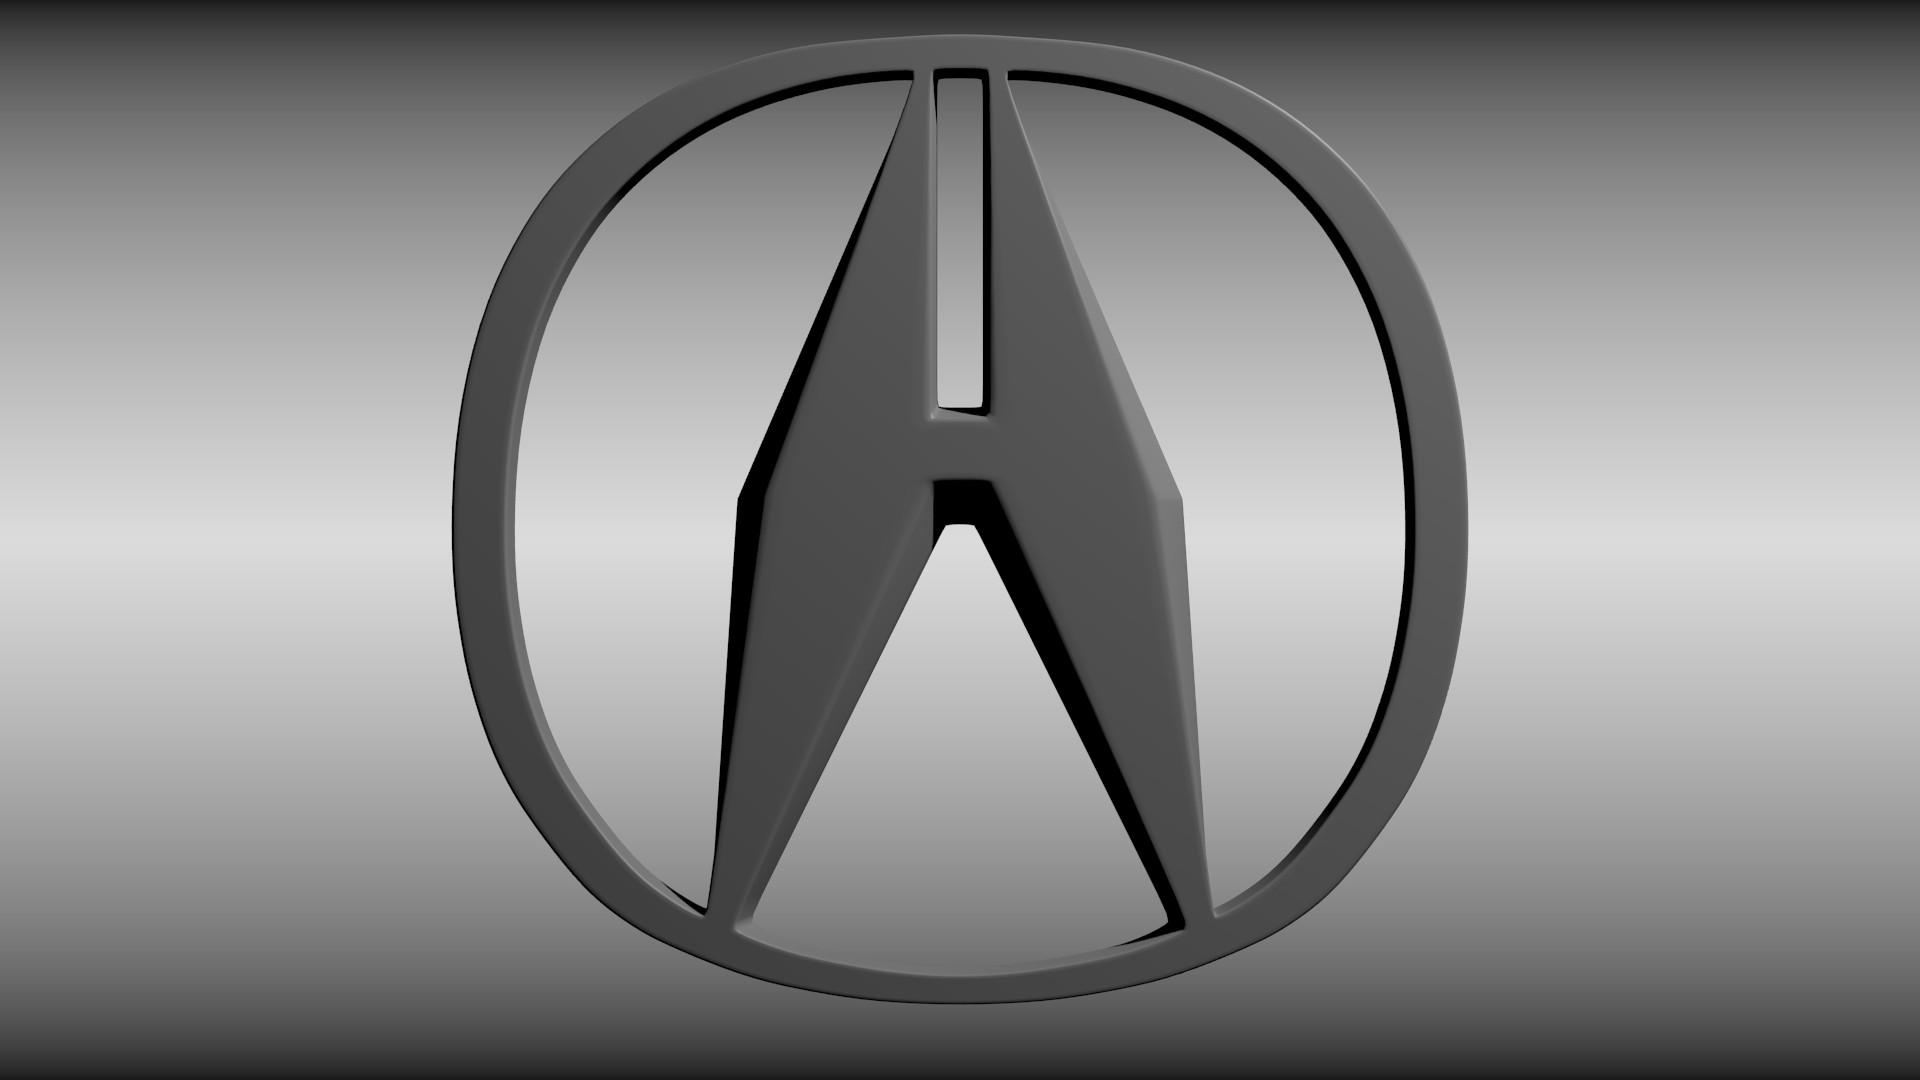 Acura Logo Desktop Wallpaper